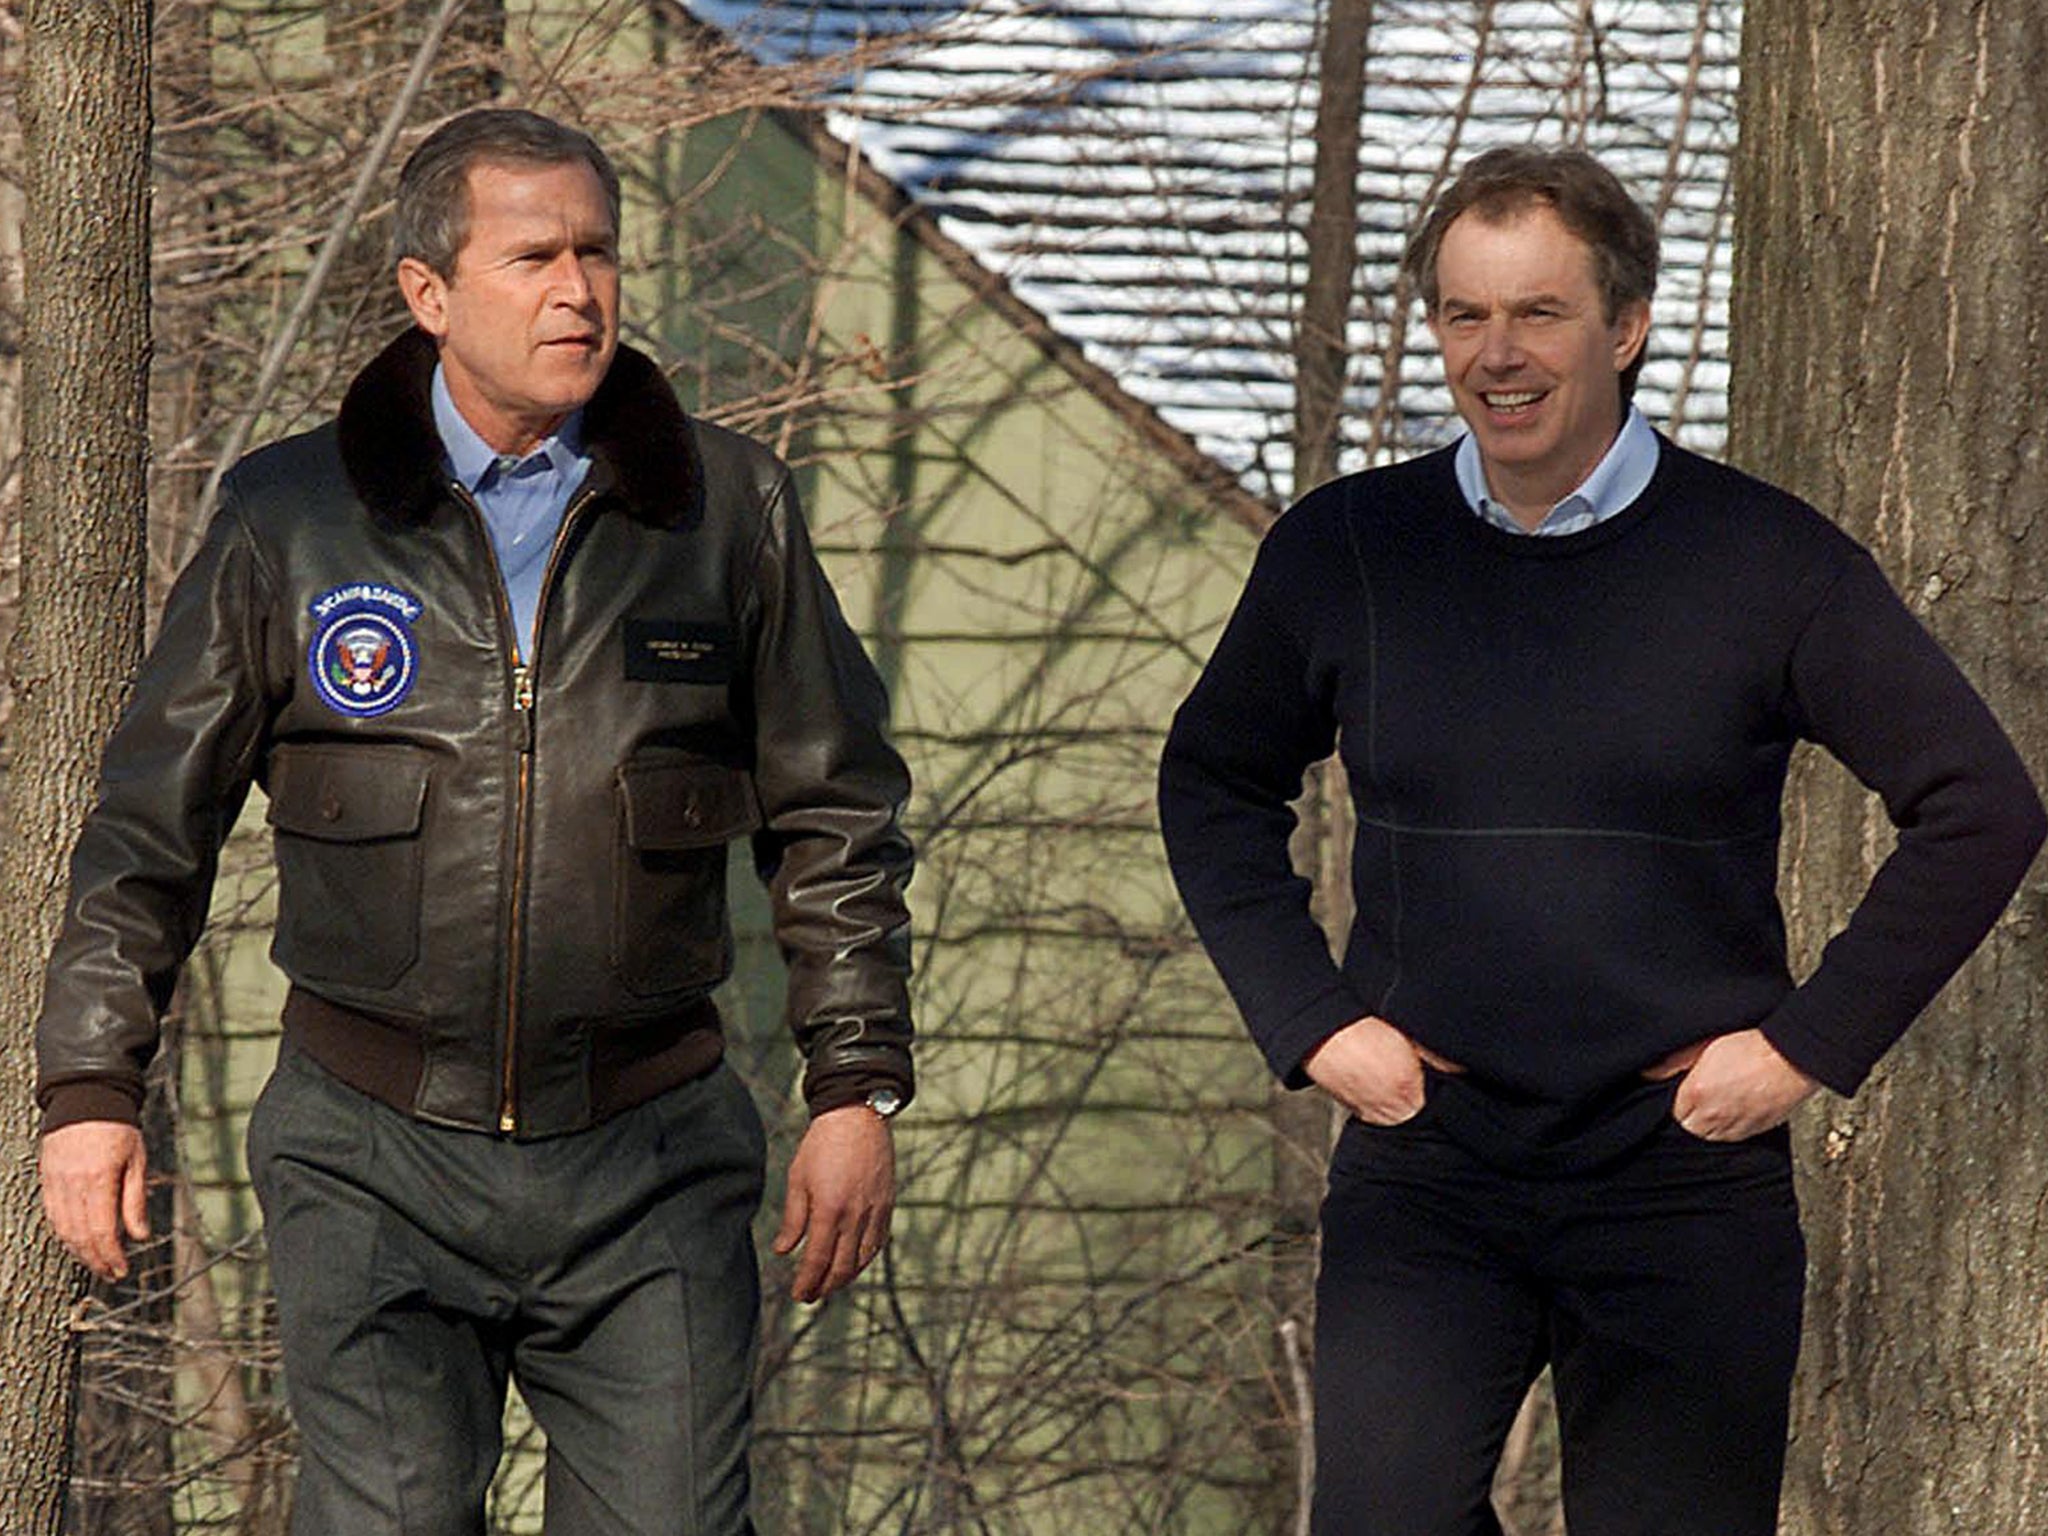 George W Bush and Tony Blair at Camp David in February 2001